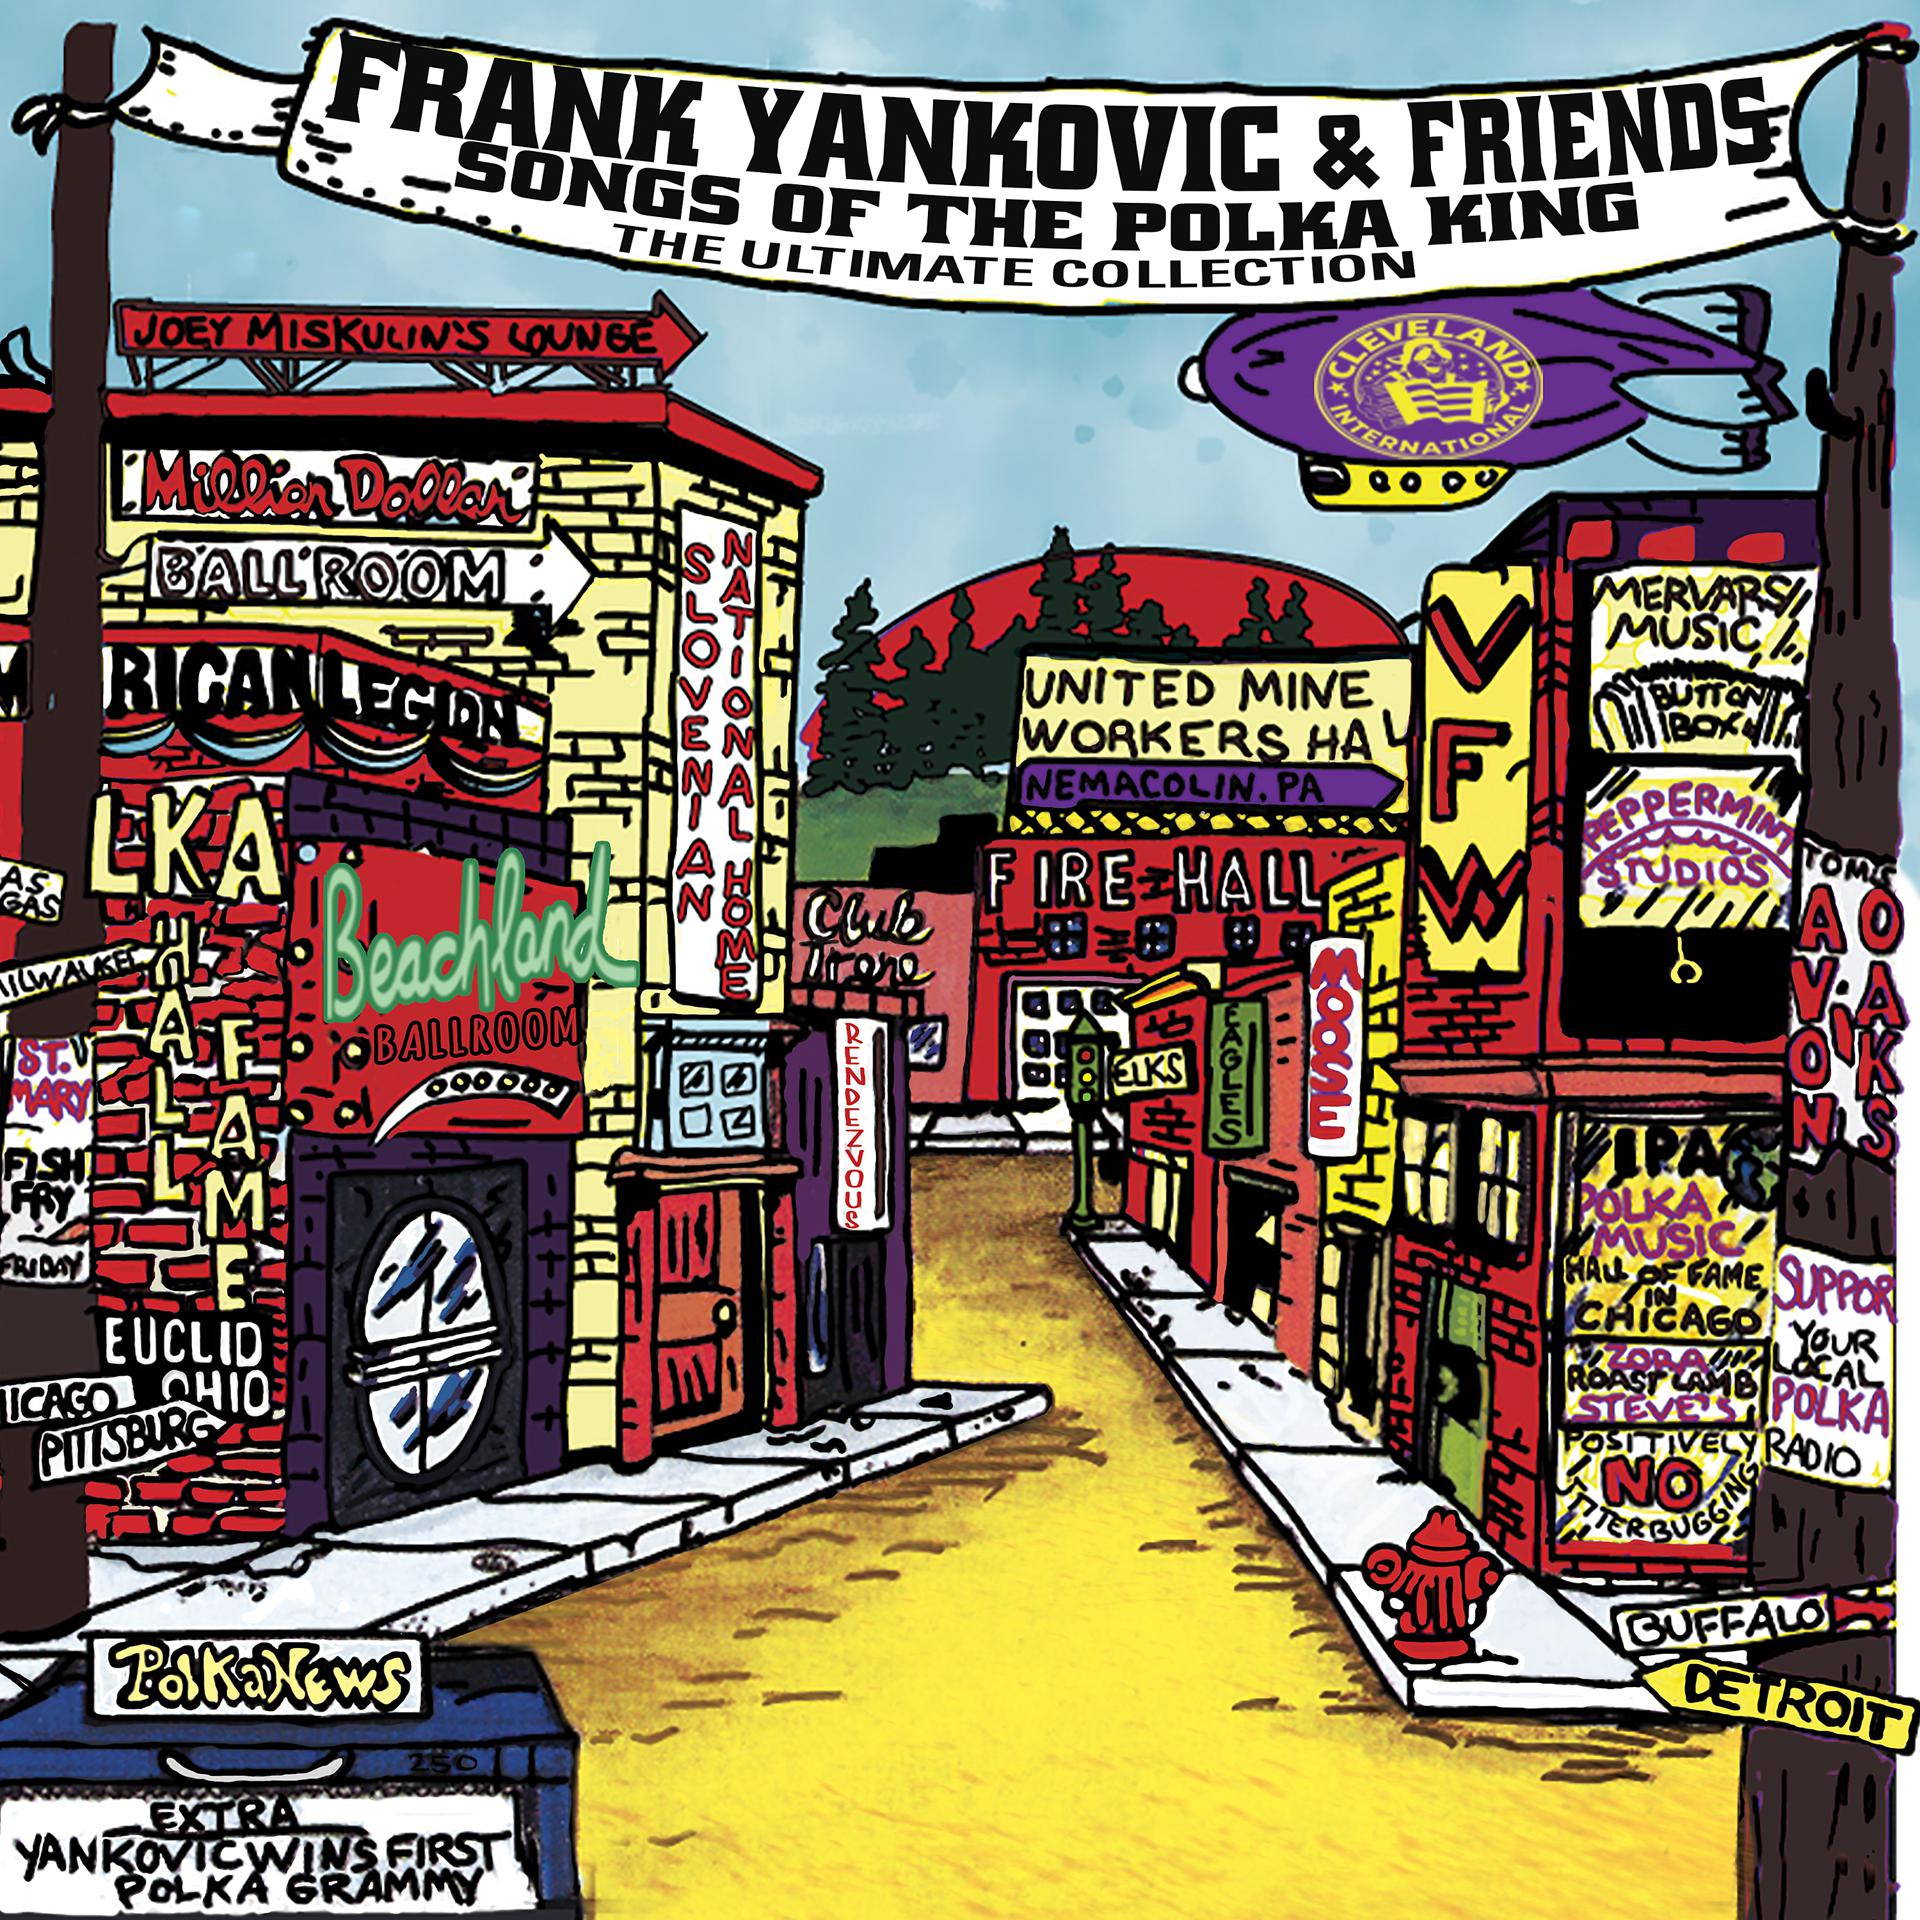 Фрэнк треки. Frankie Yankovic. Полька who stole the Kishka синтезатор Remix.